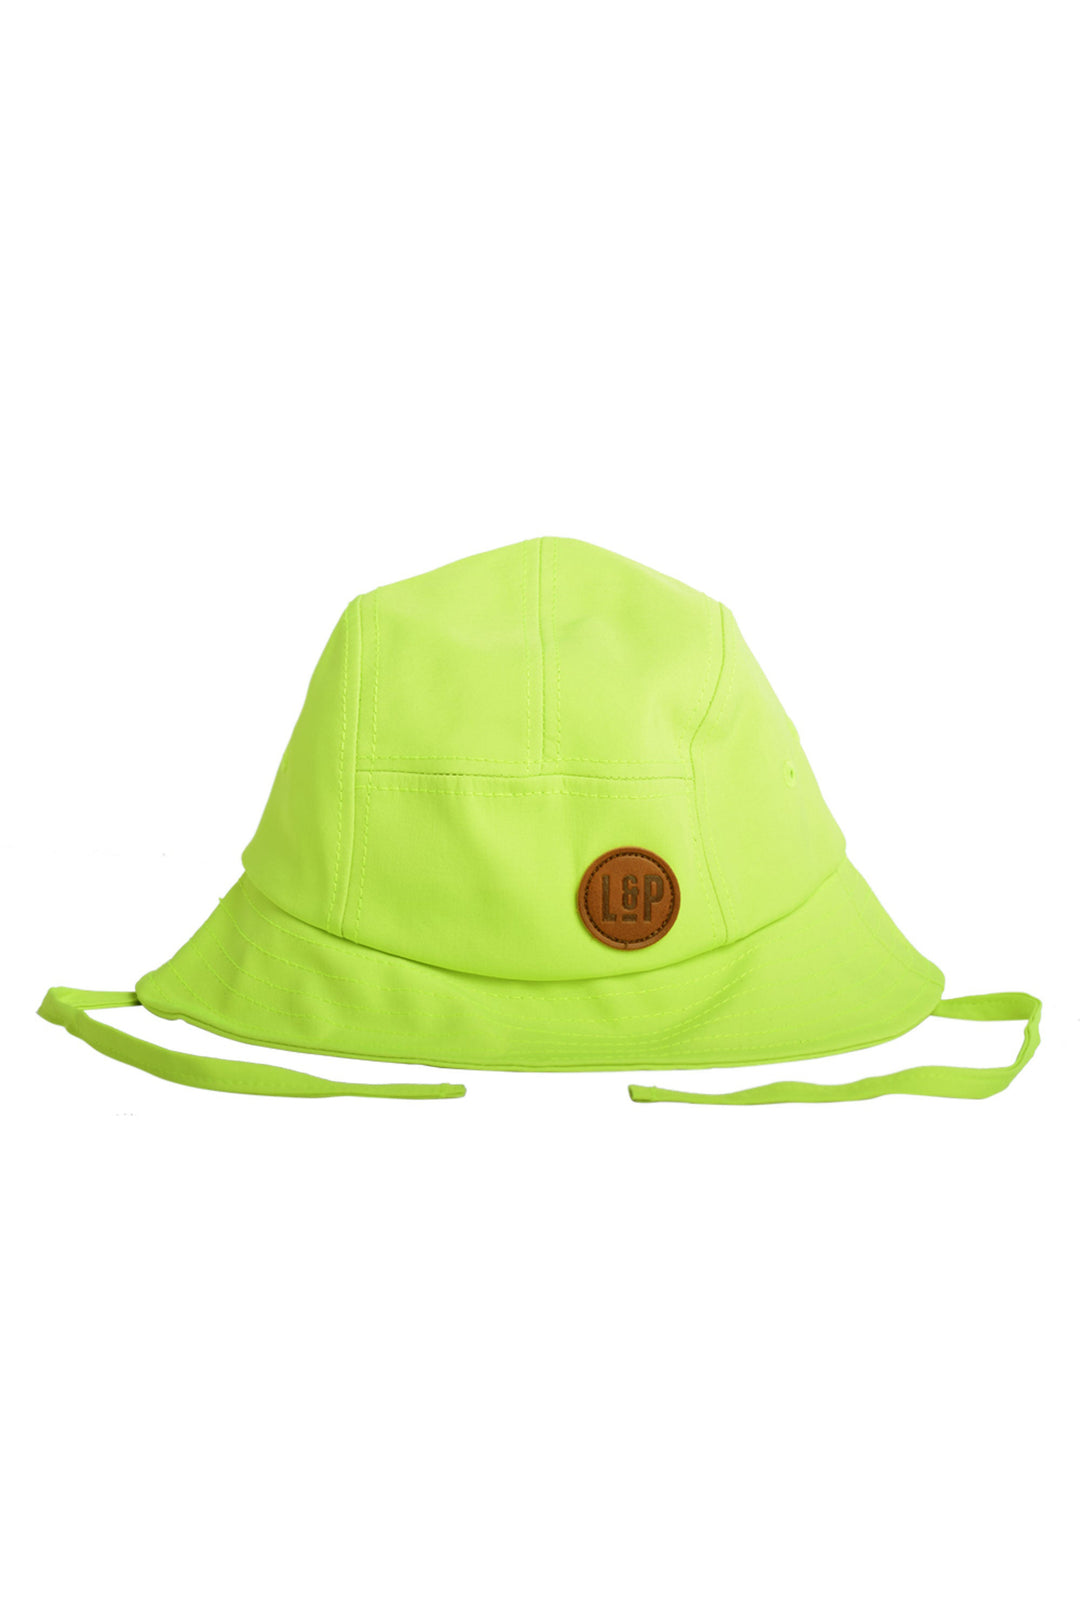 Street Hat [Baby]